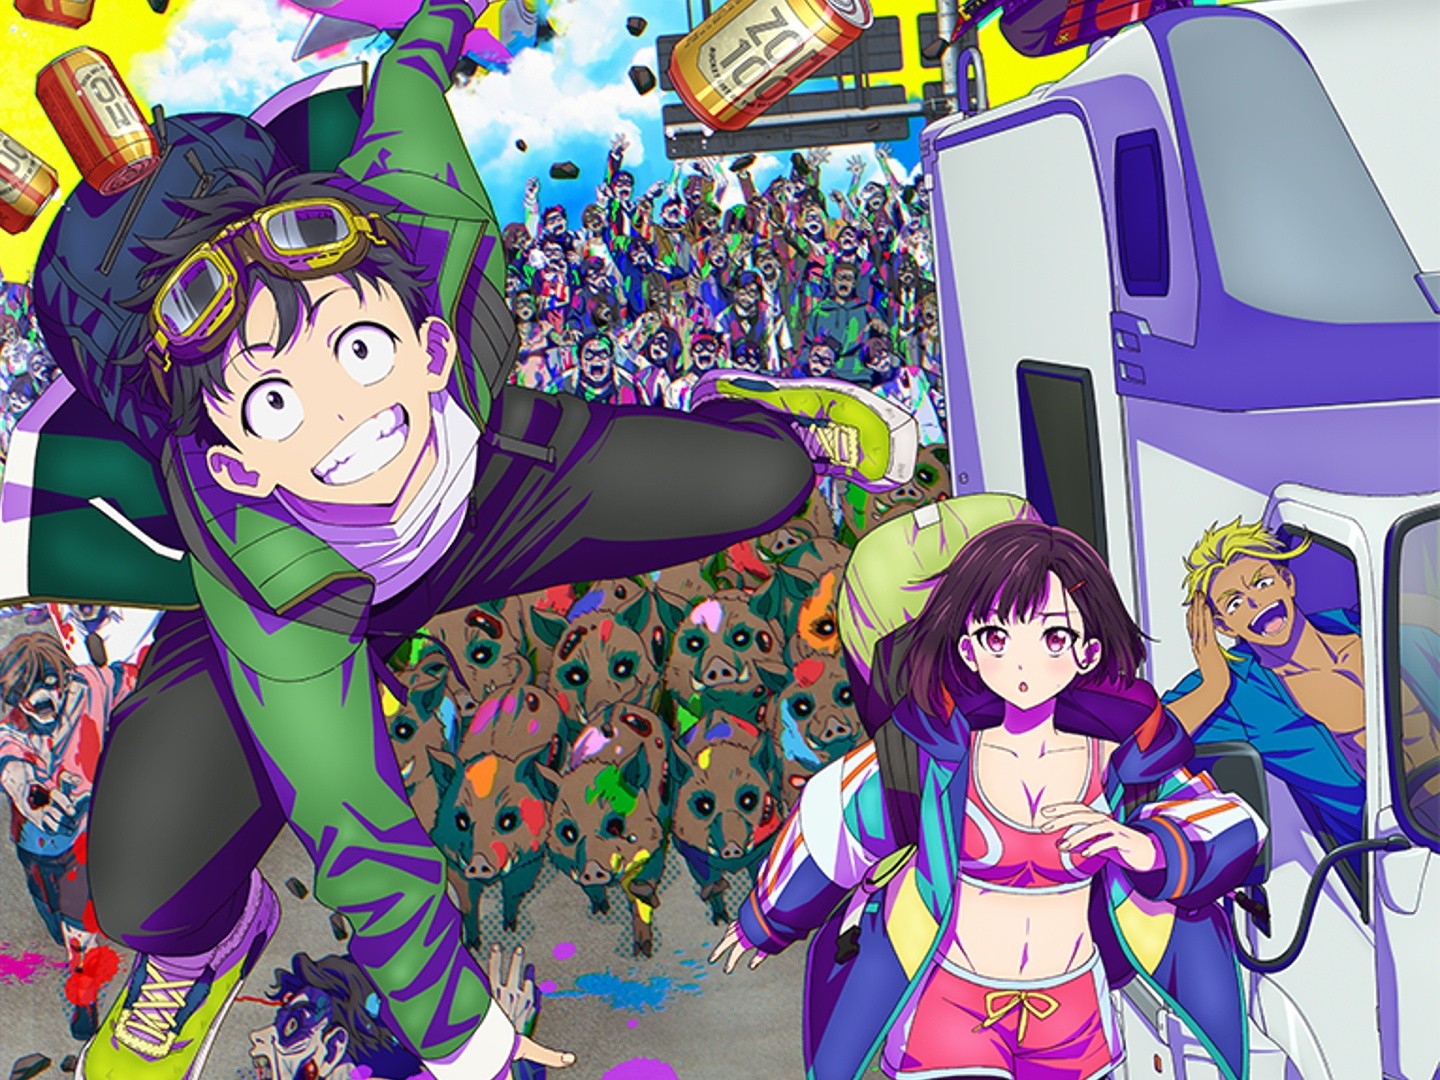 The 100 Girlfriends Who Really Really Really Really Really Love You  Manga Gets TV Anime  News  Anime News Network